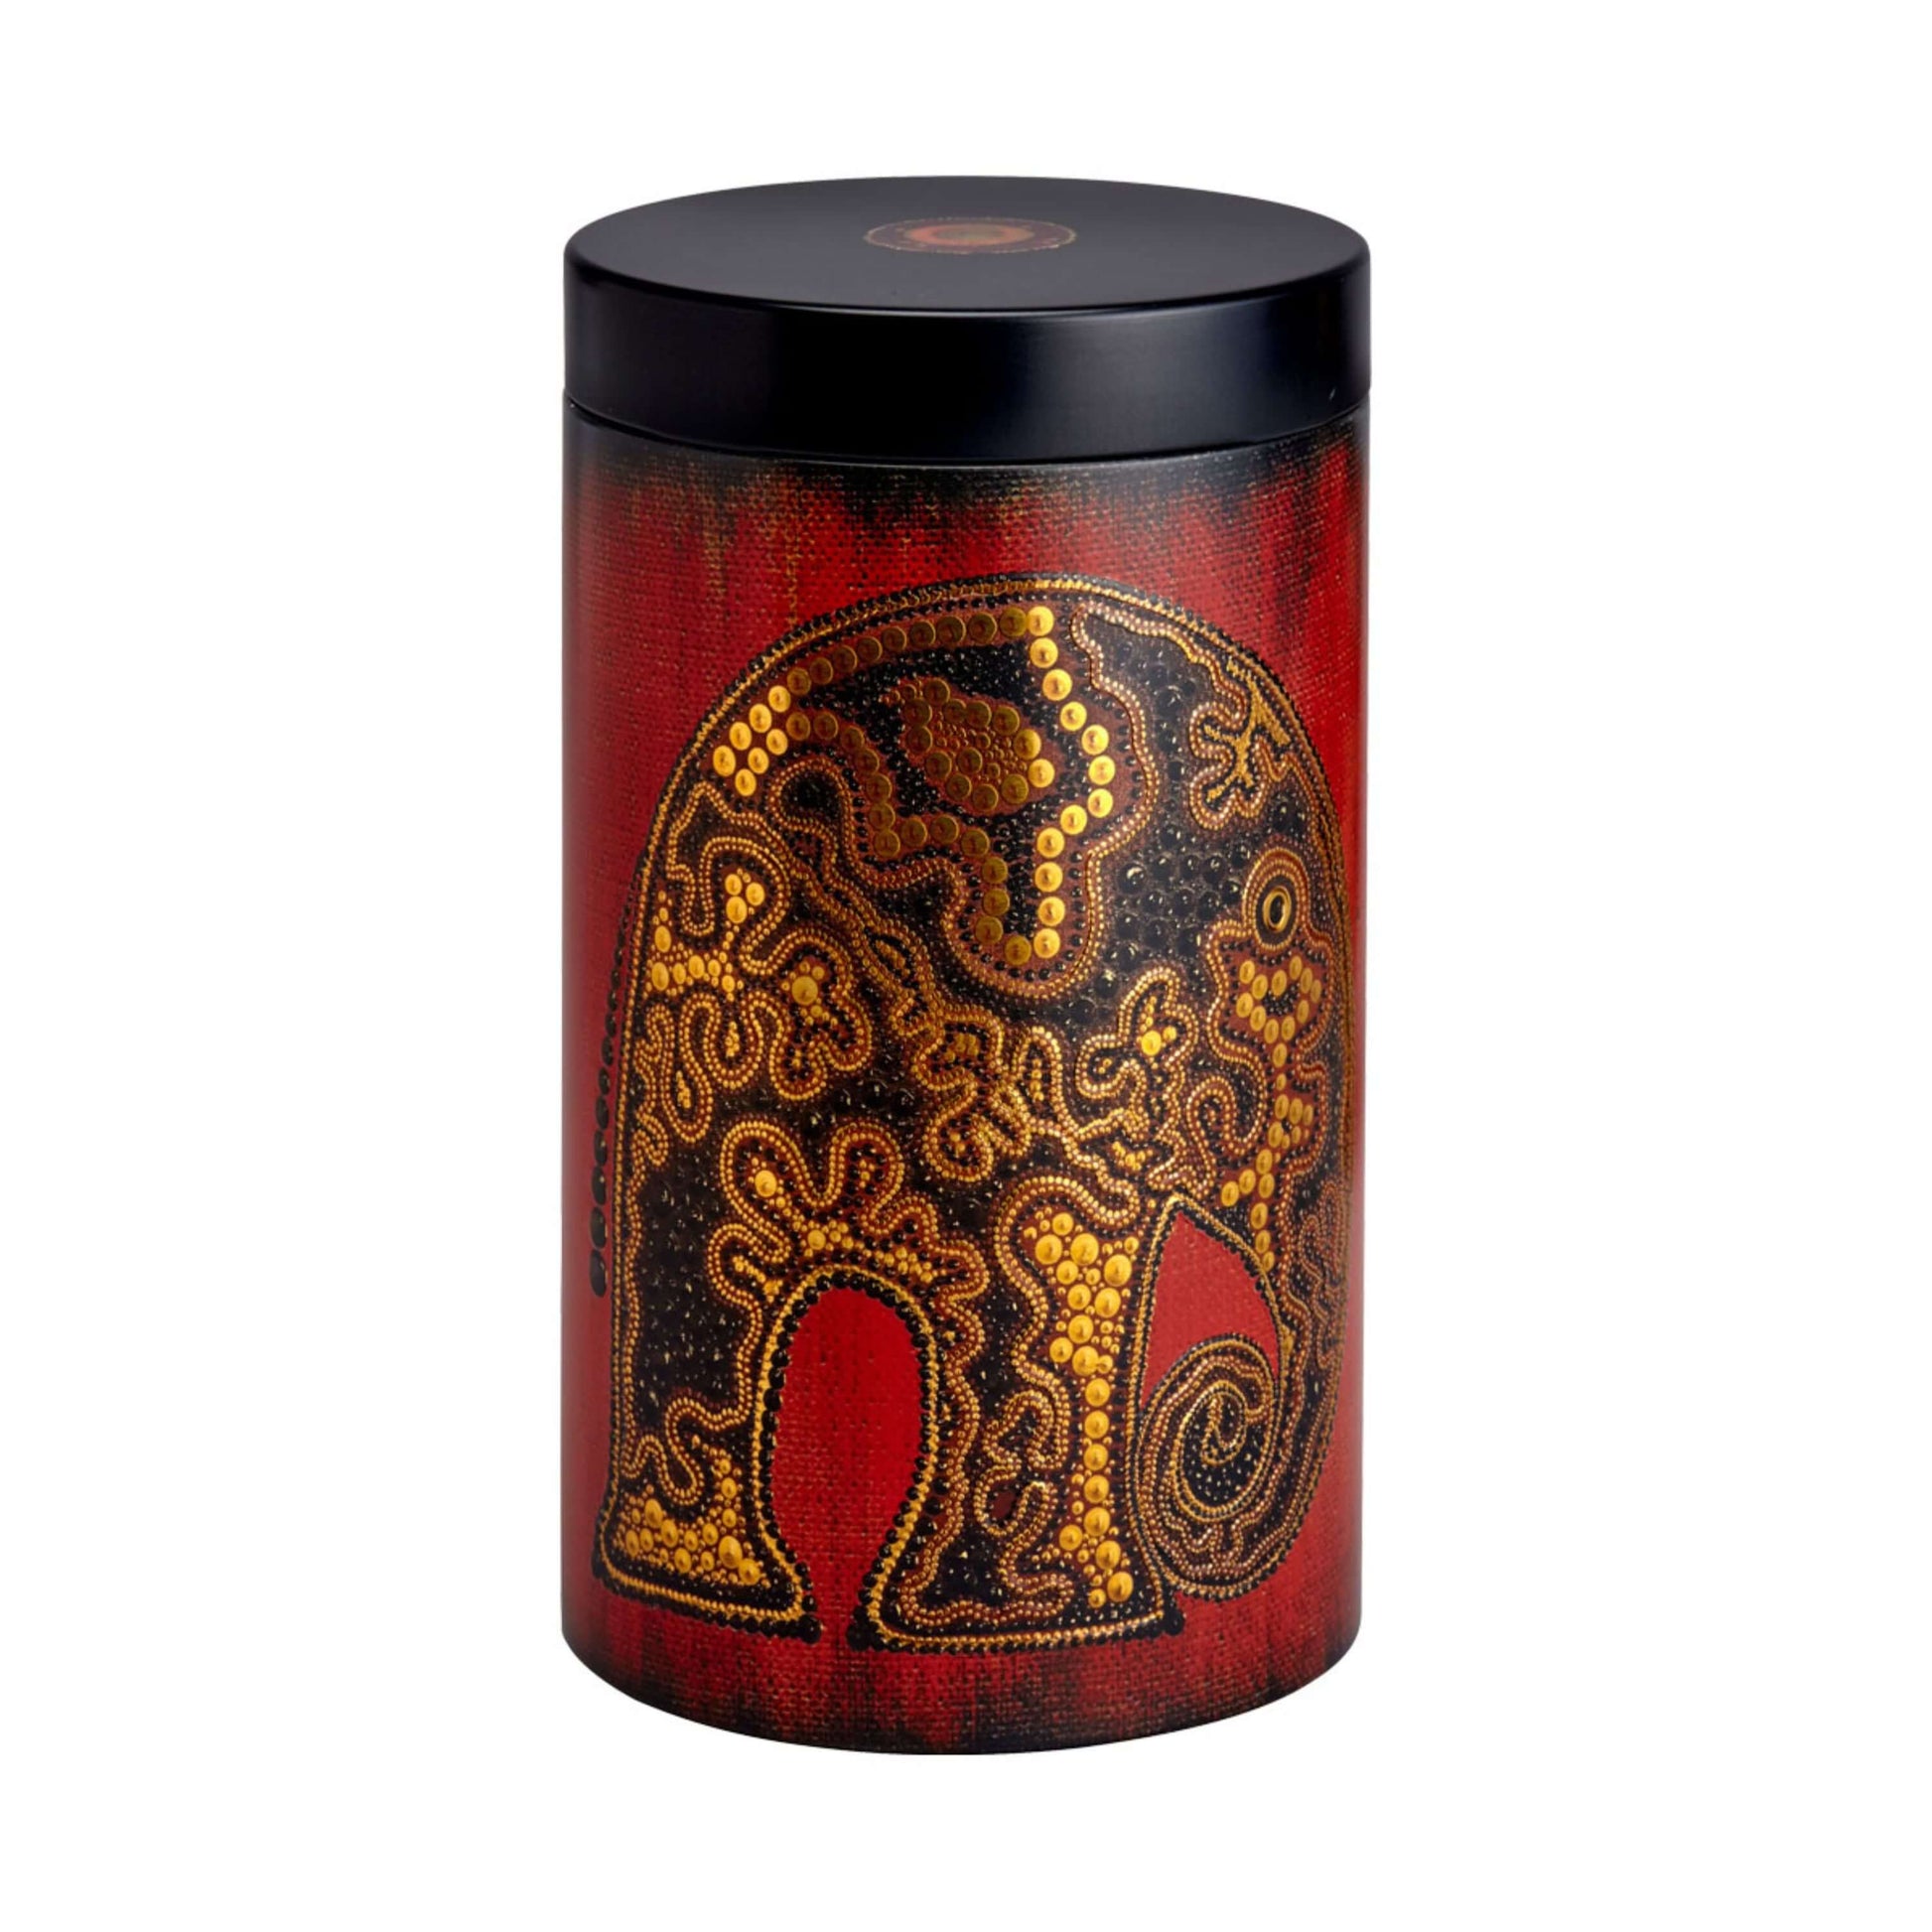 Koffieblik Afrikaanse Olifant, inhoud 500 gr.